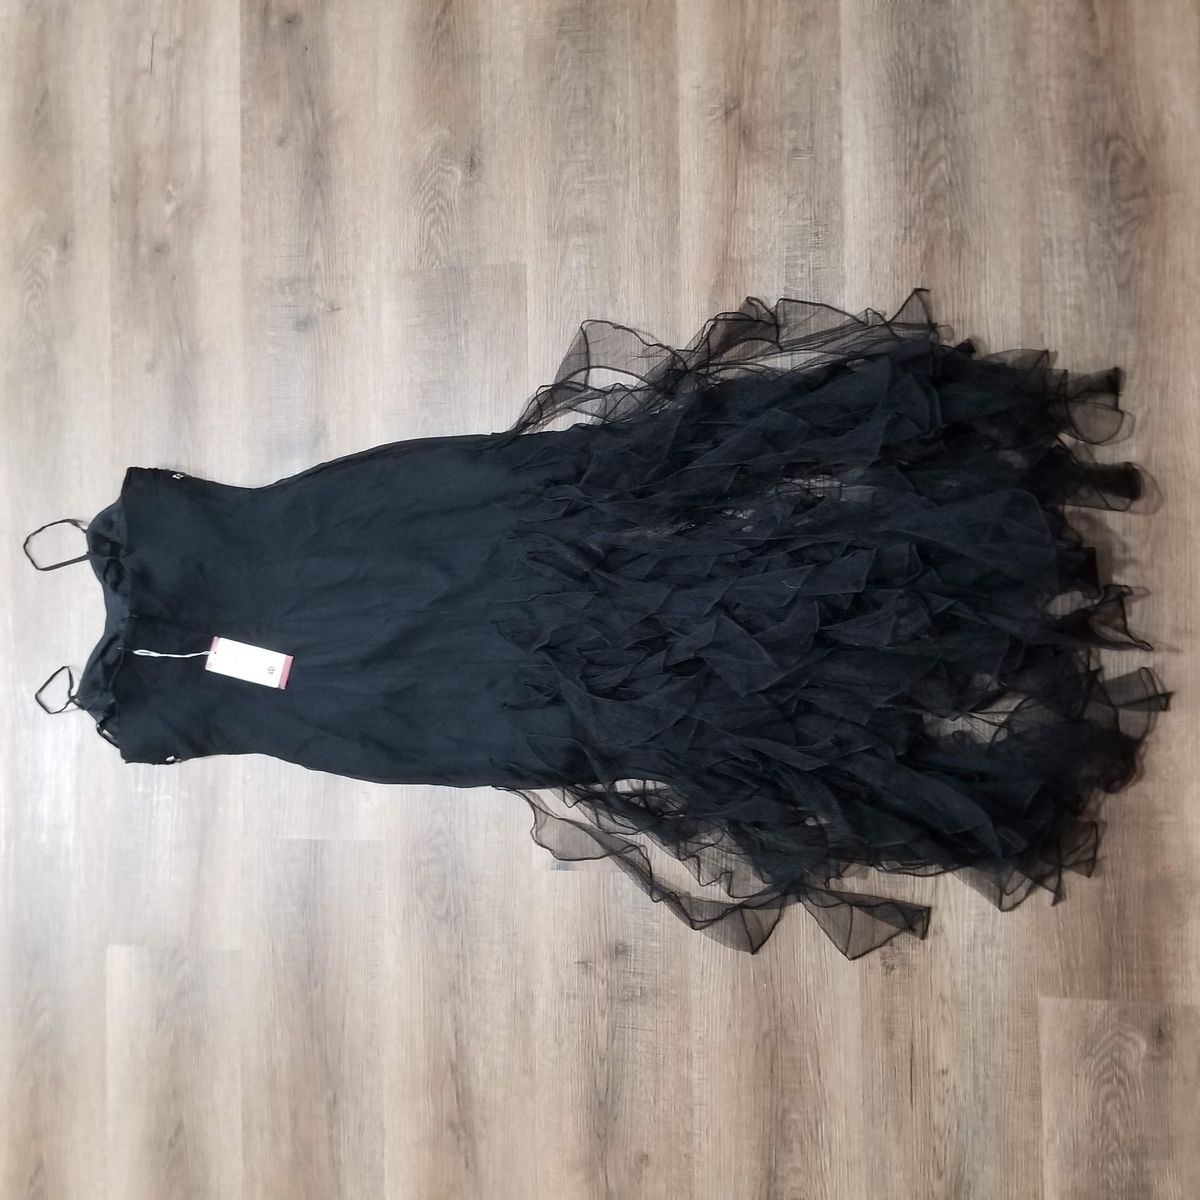 Style Vintage La Femme Size 6 Satin Black Mermaid Dress on Queenly